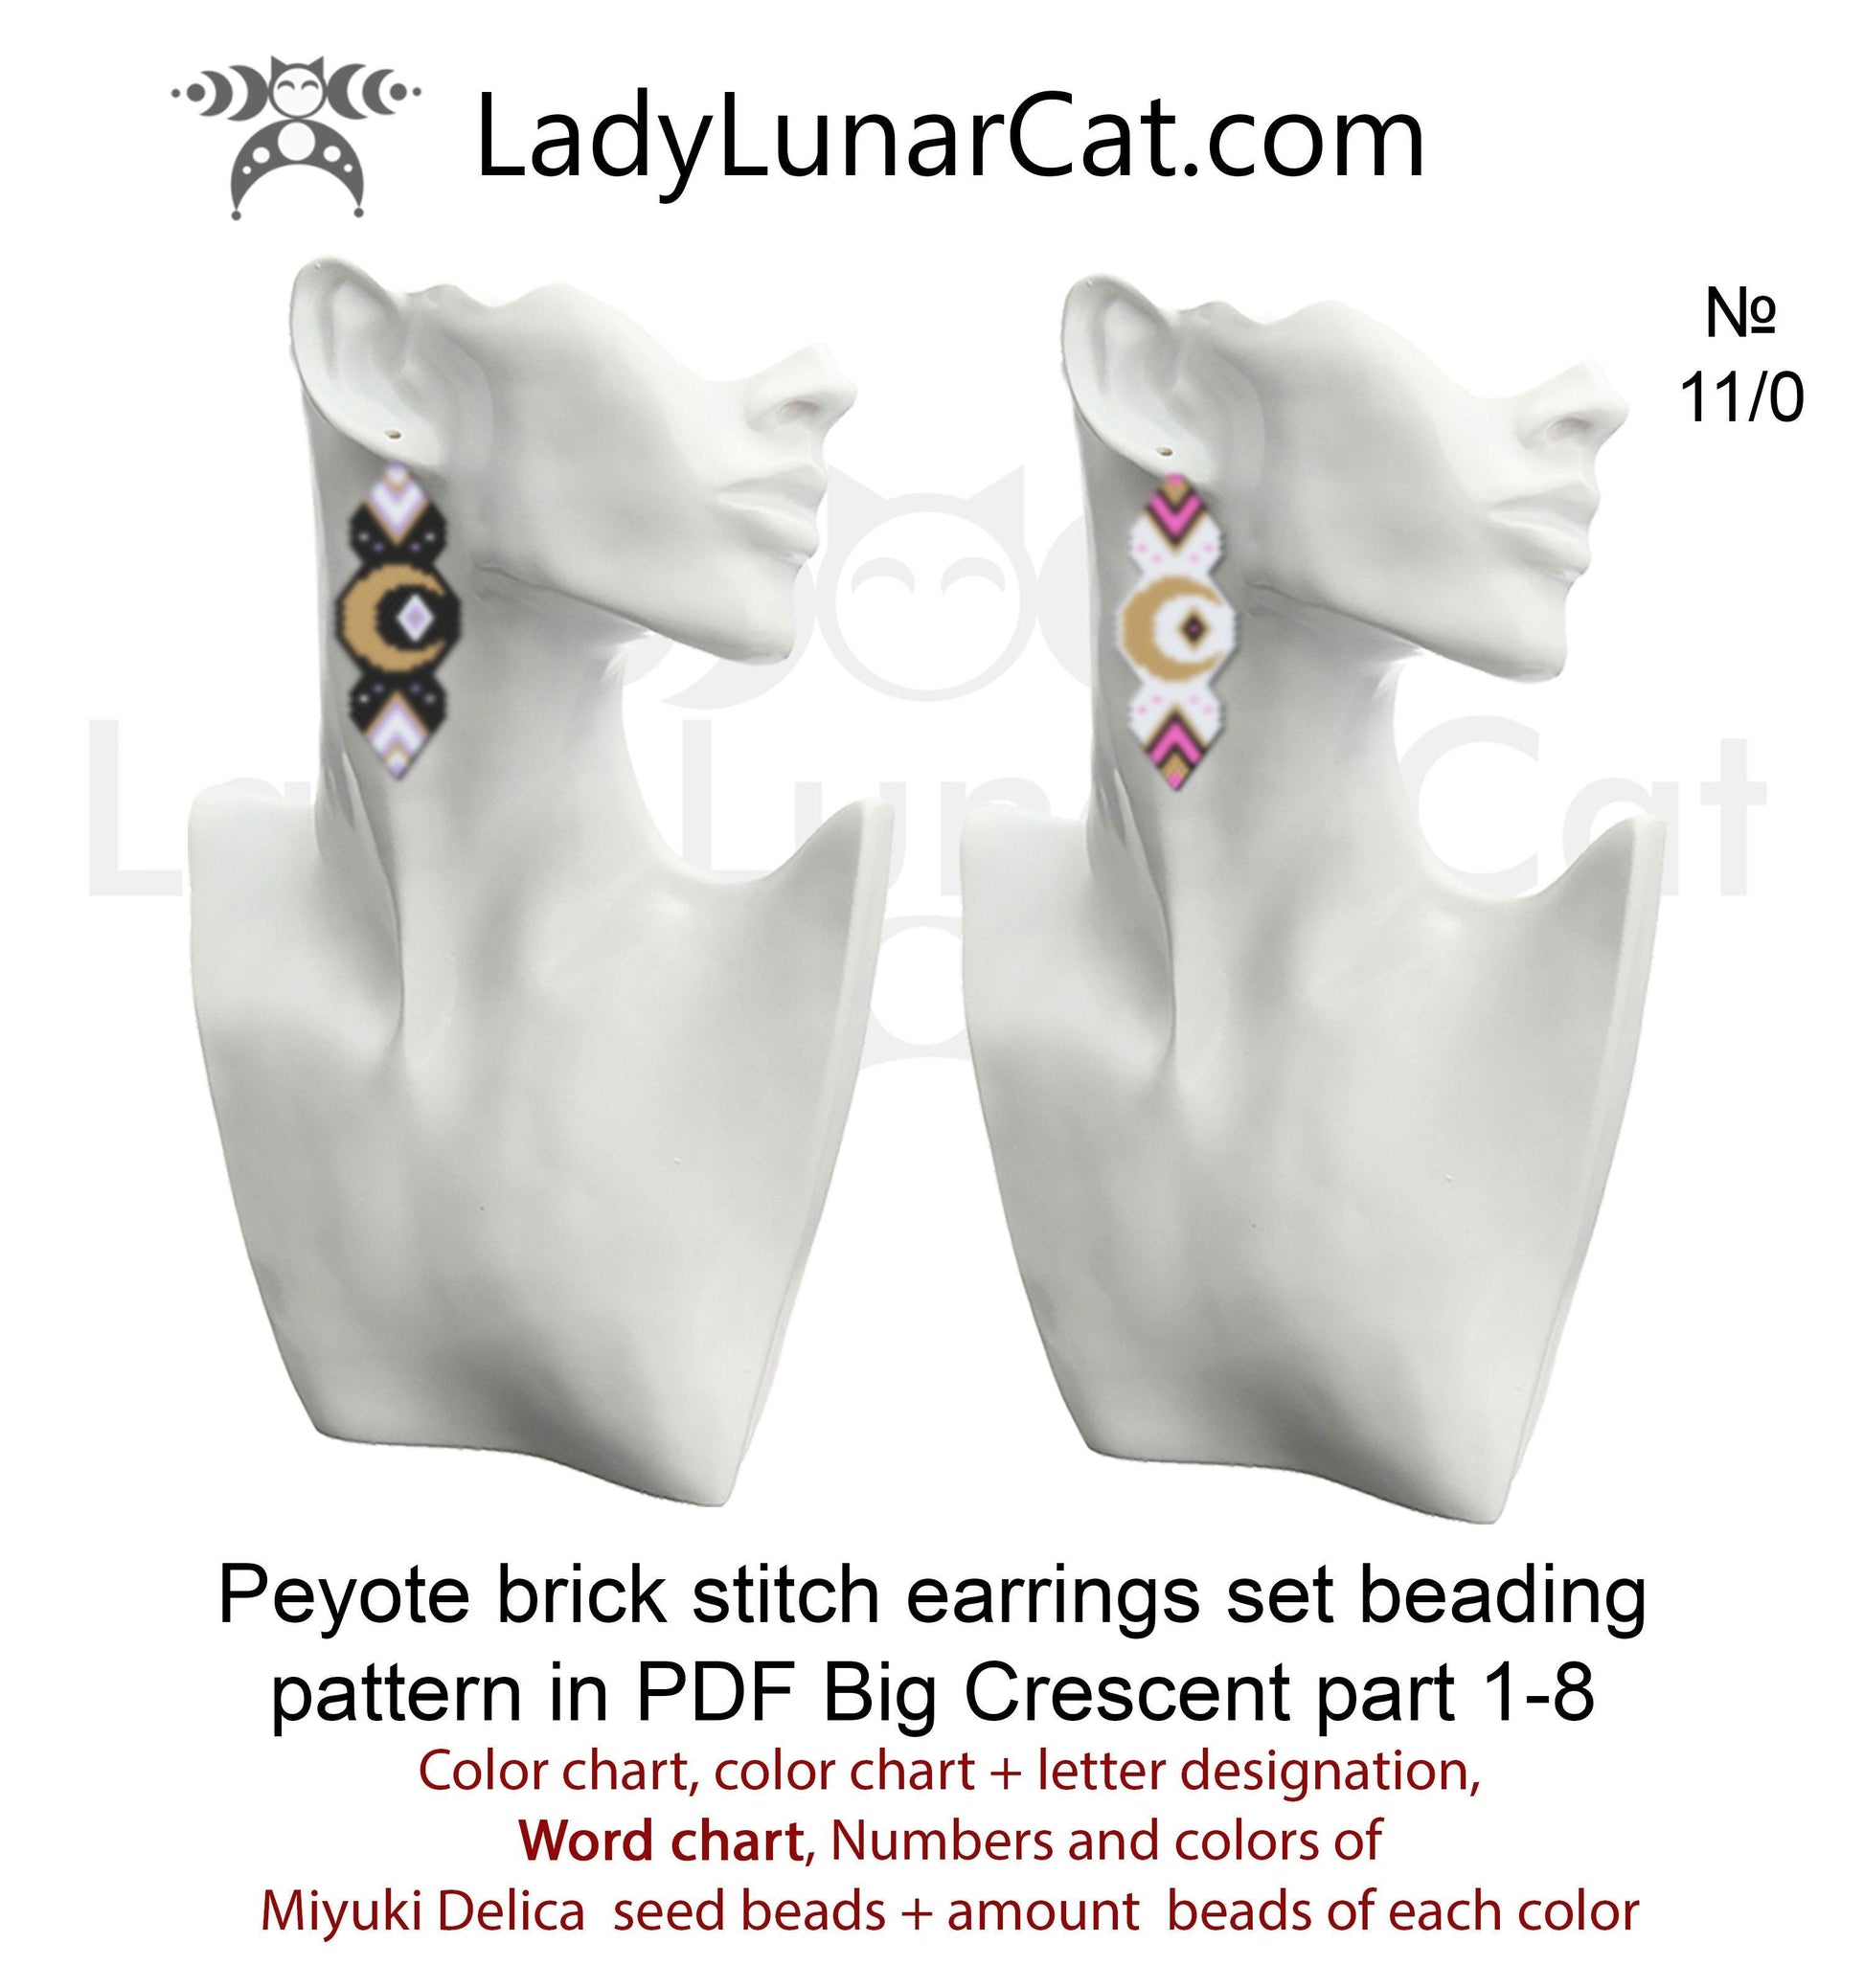 Brick stitch patterns for beading Crescent moon earrings set LadyLunarCat